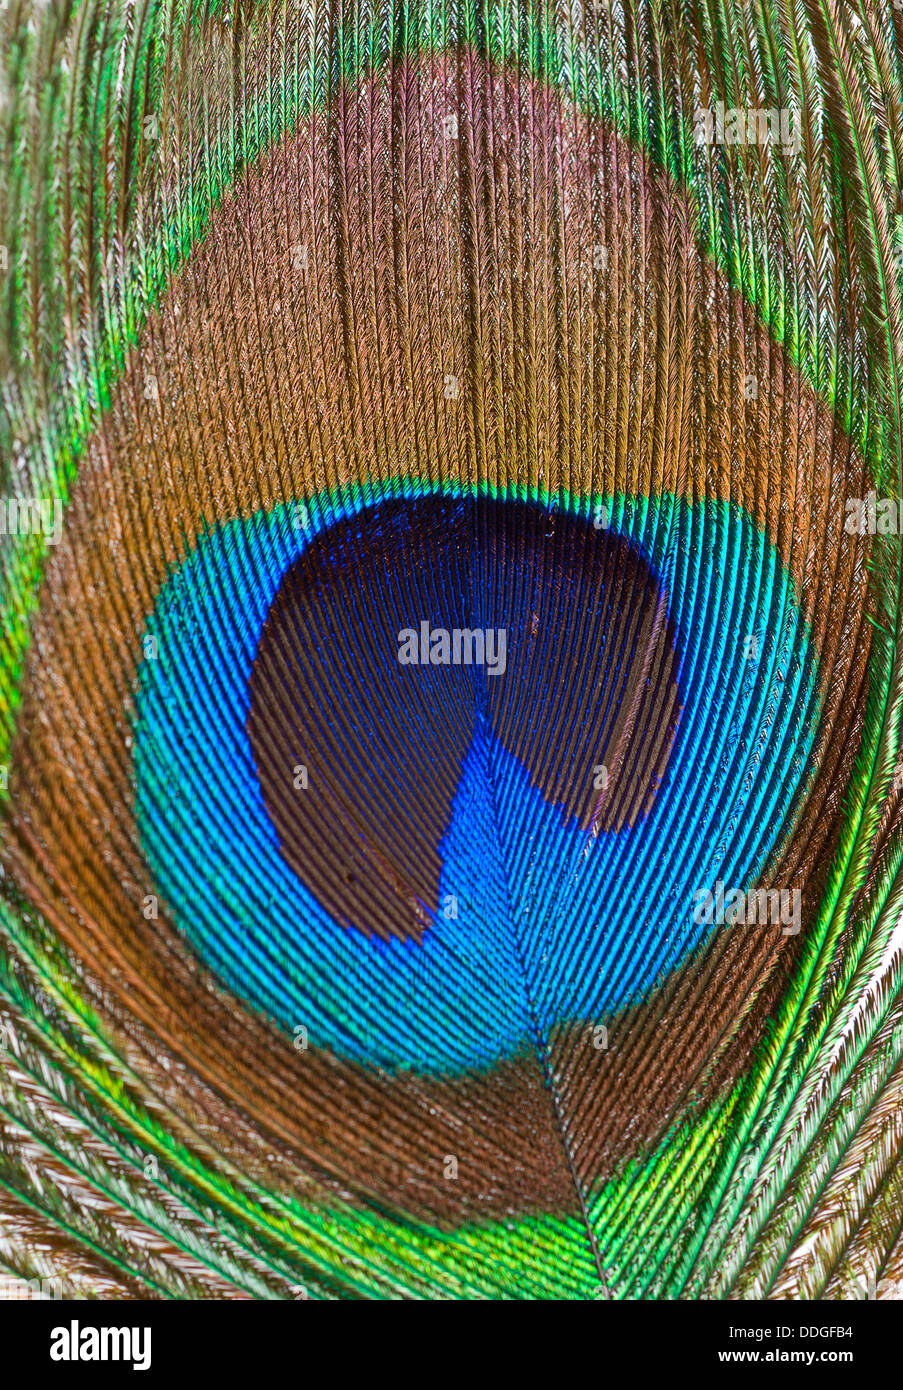 Peacock feather closeup Stock Photo